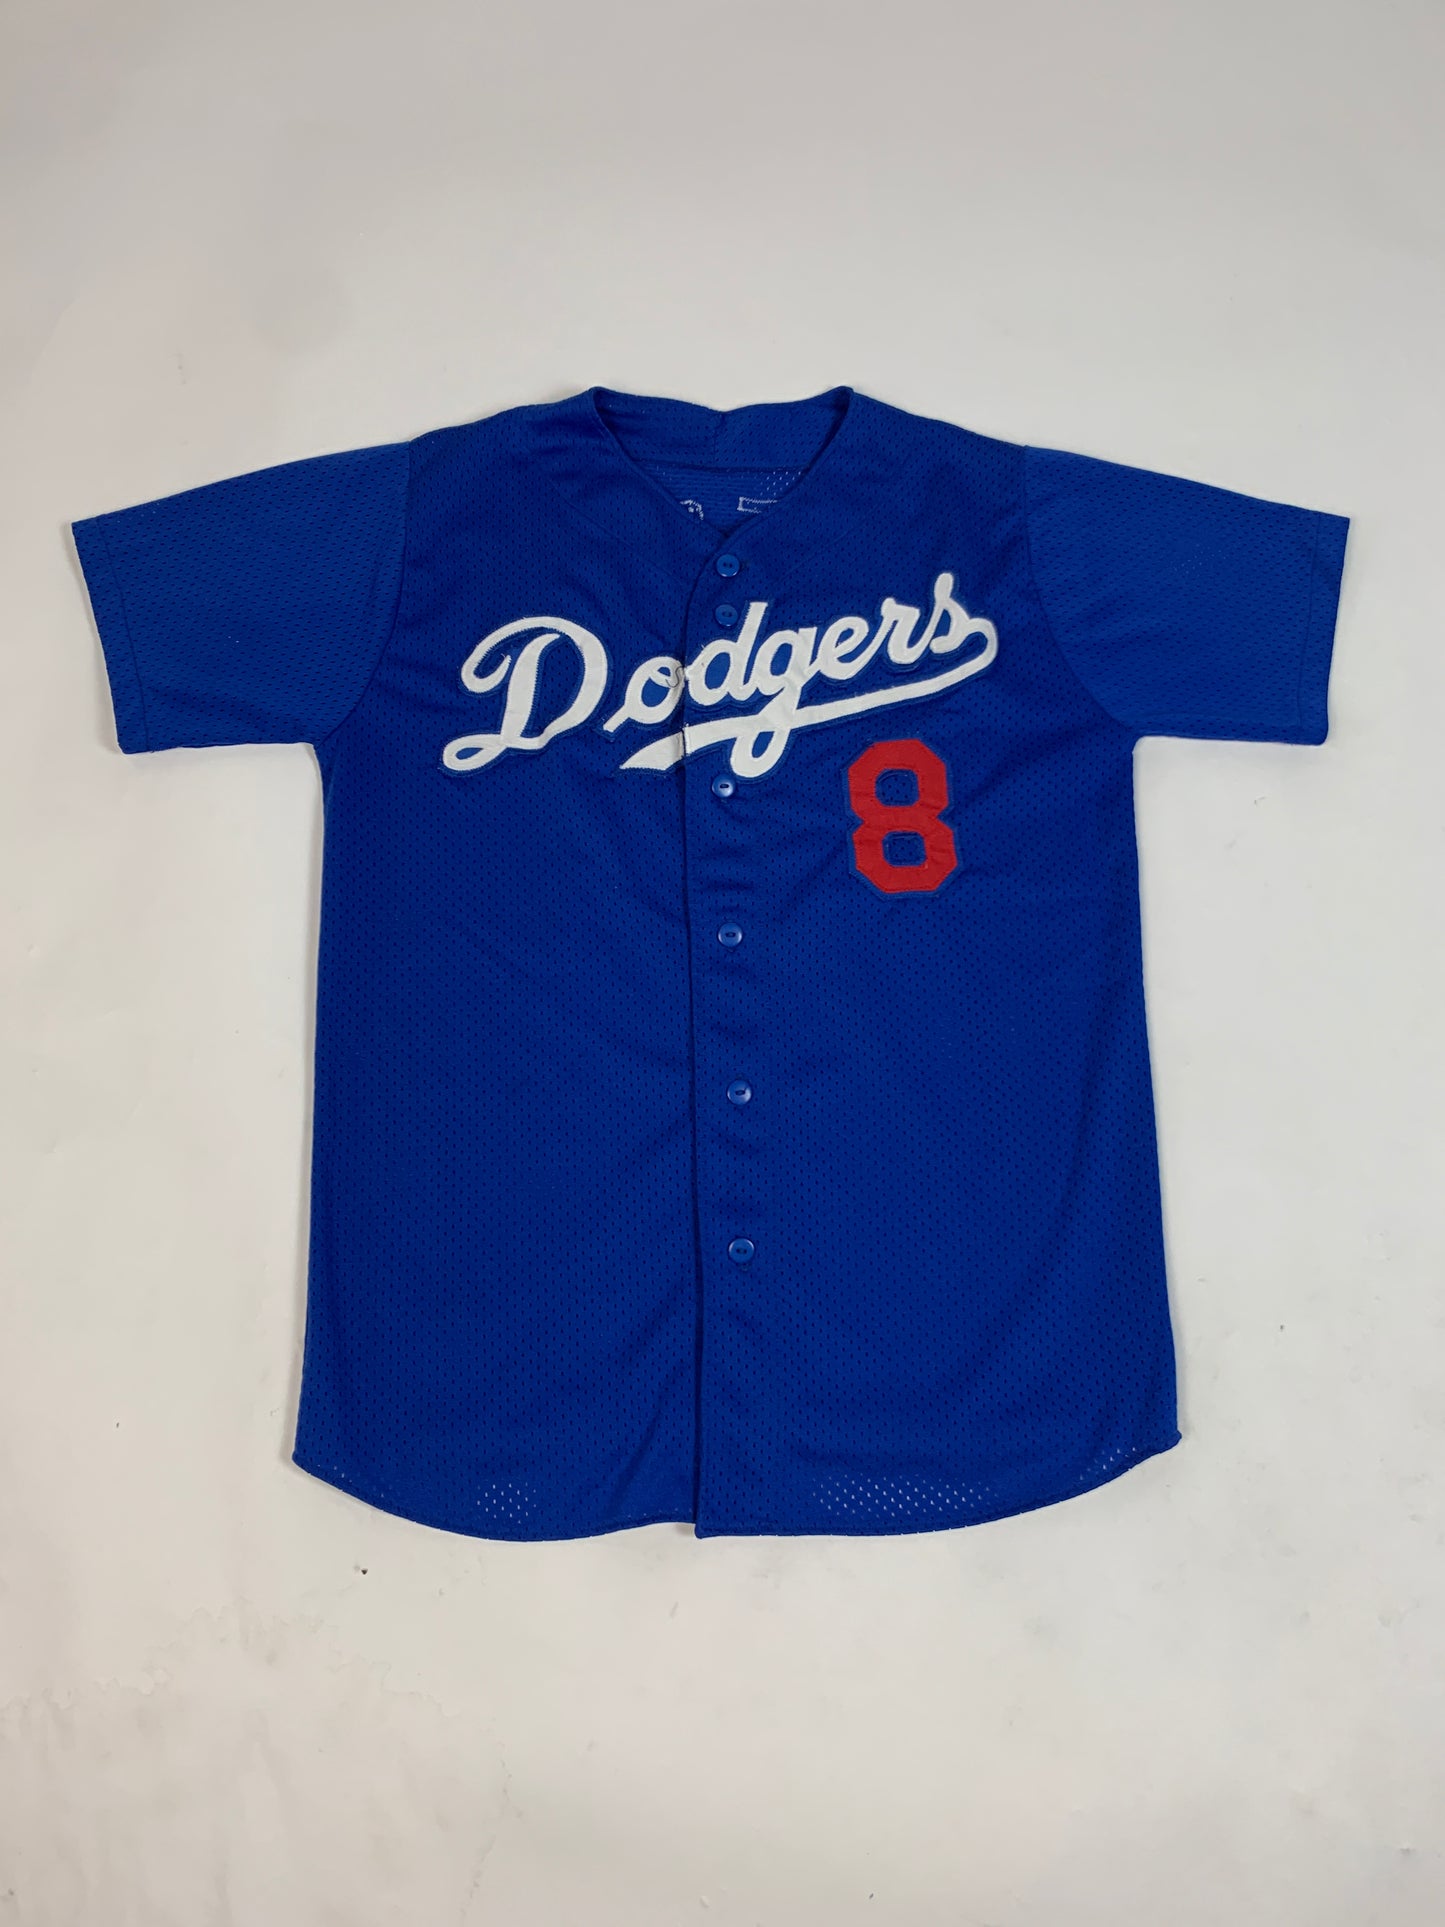 Jersey Dodgers Vintage - M